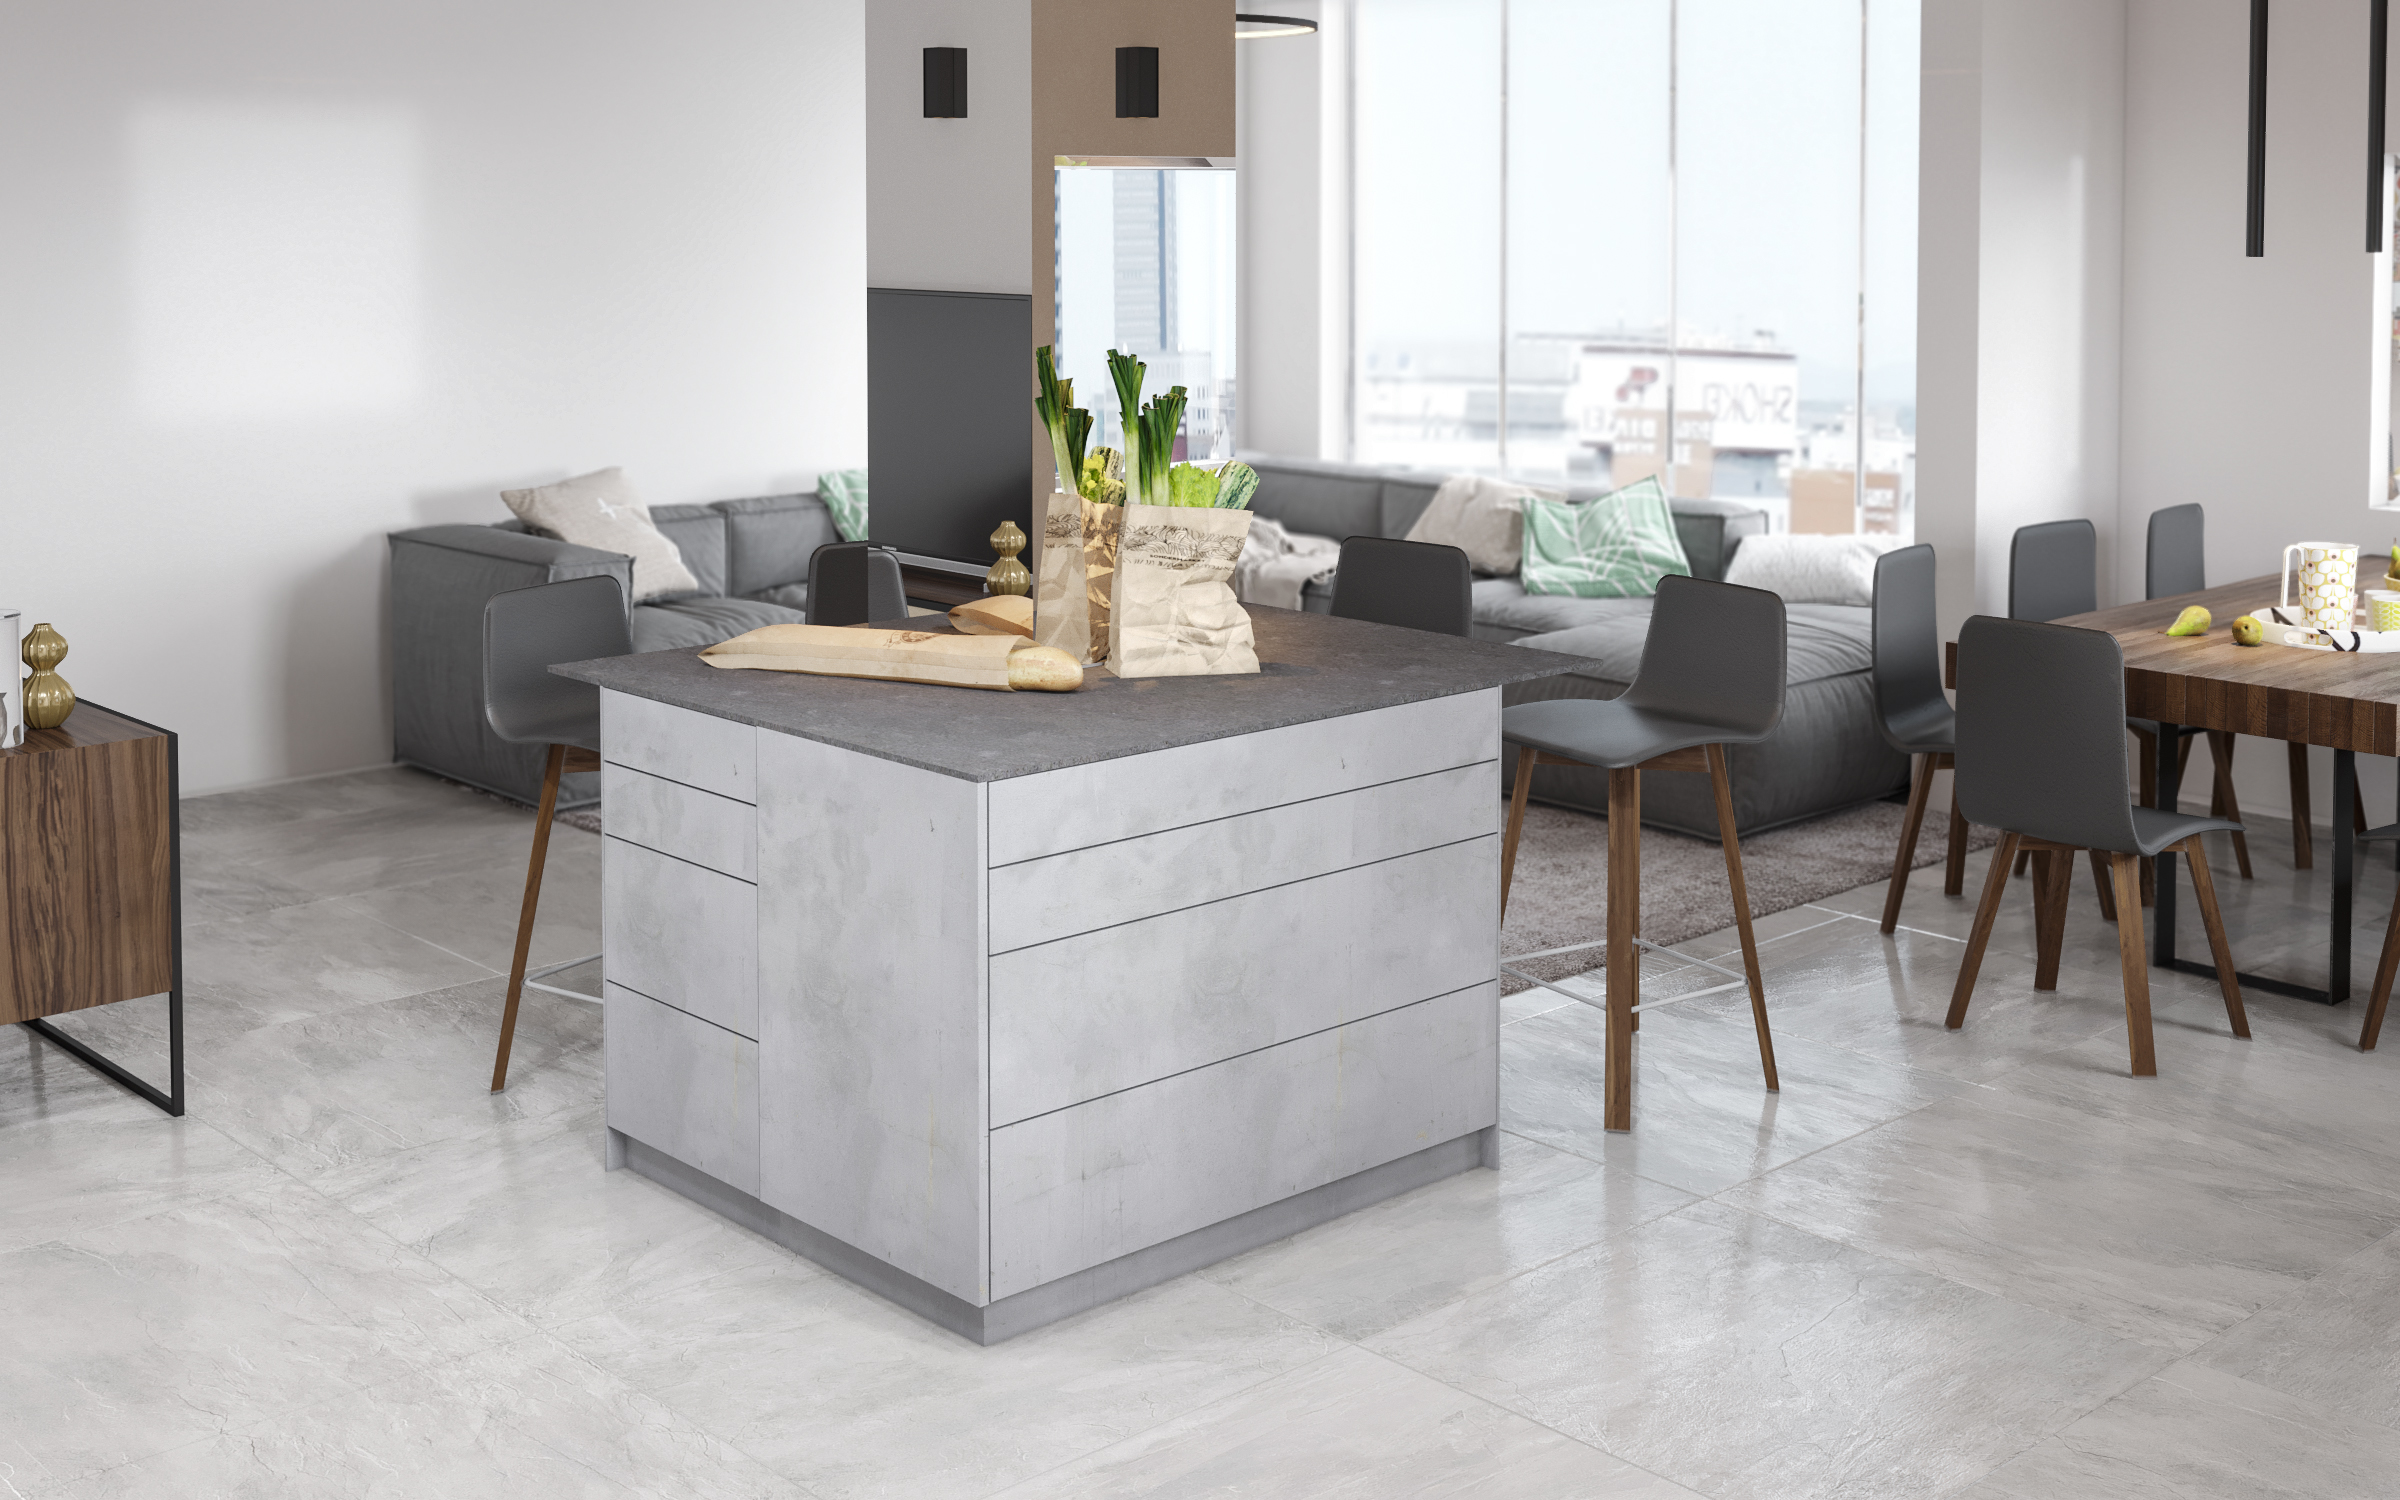 Modern Kitchen in 3d max corona render image